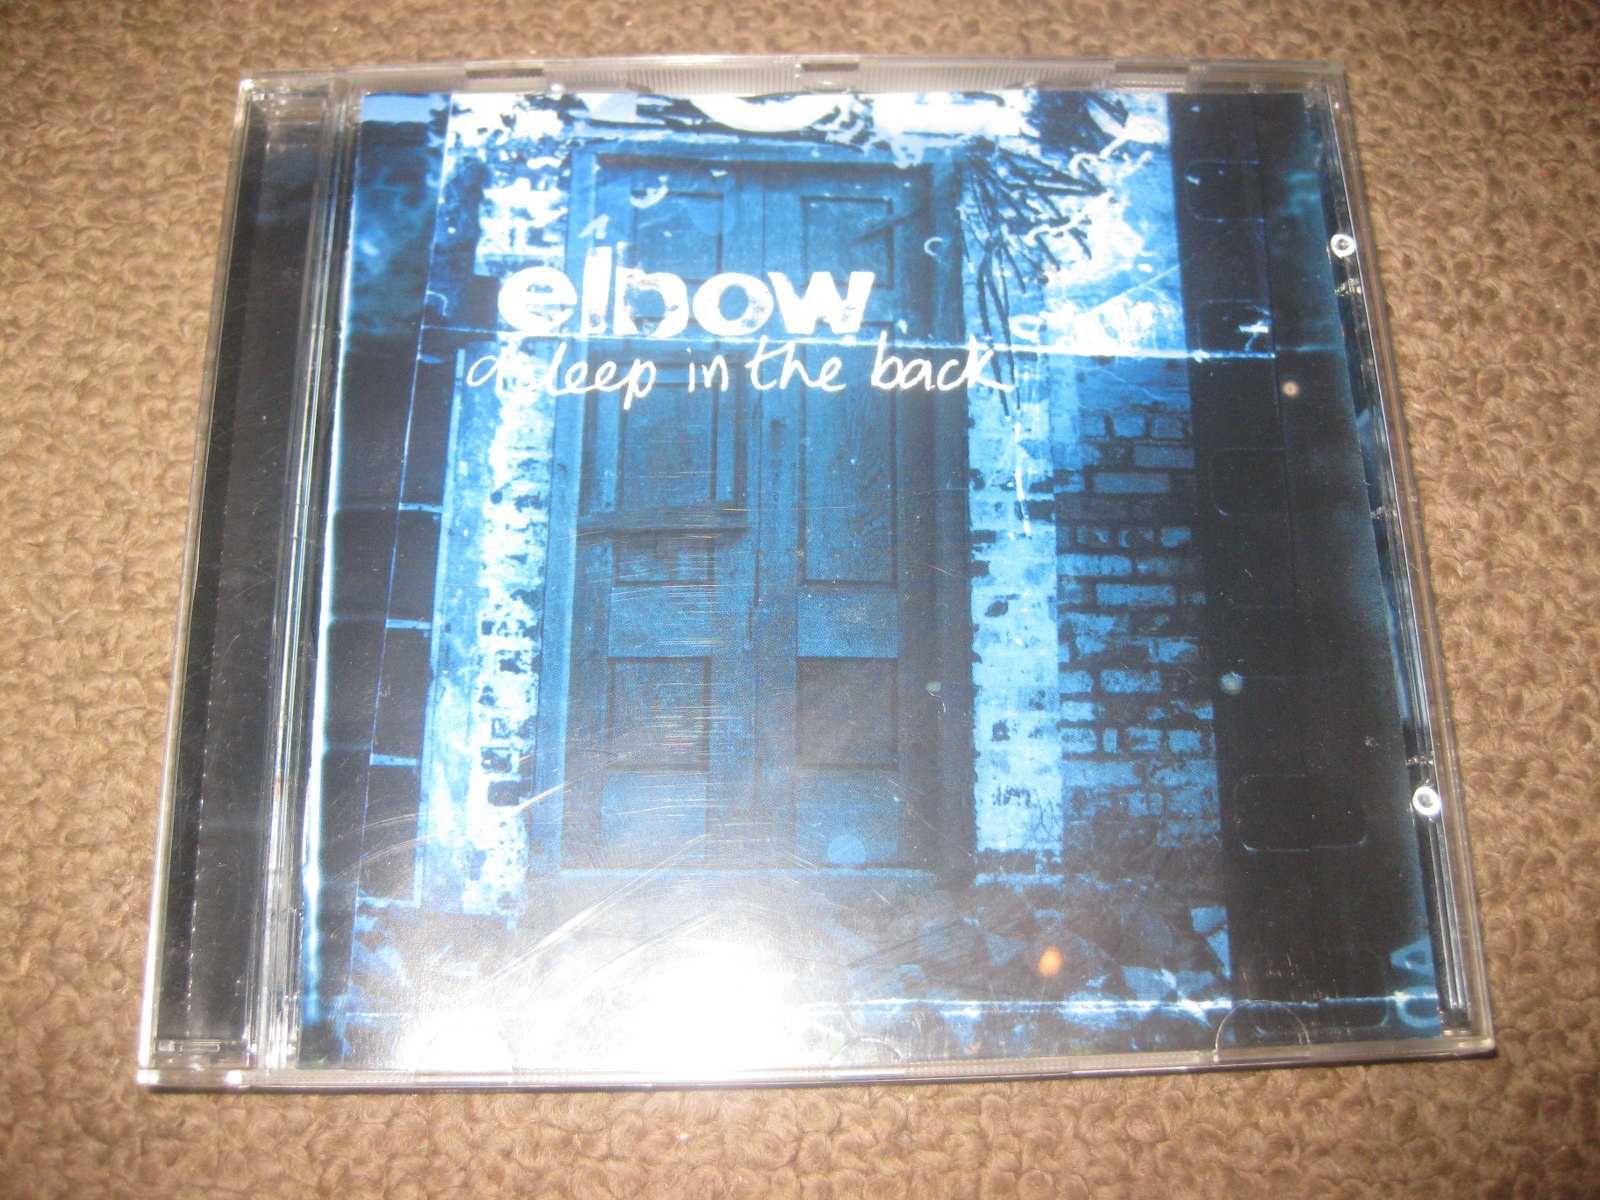 CD dos Elbow "Asleep in the Back" Portes Grátis!